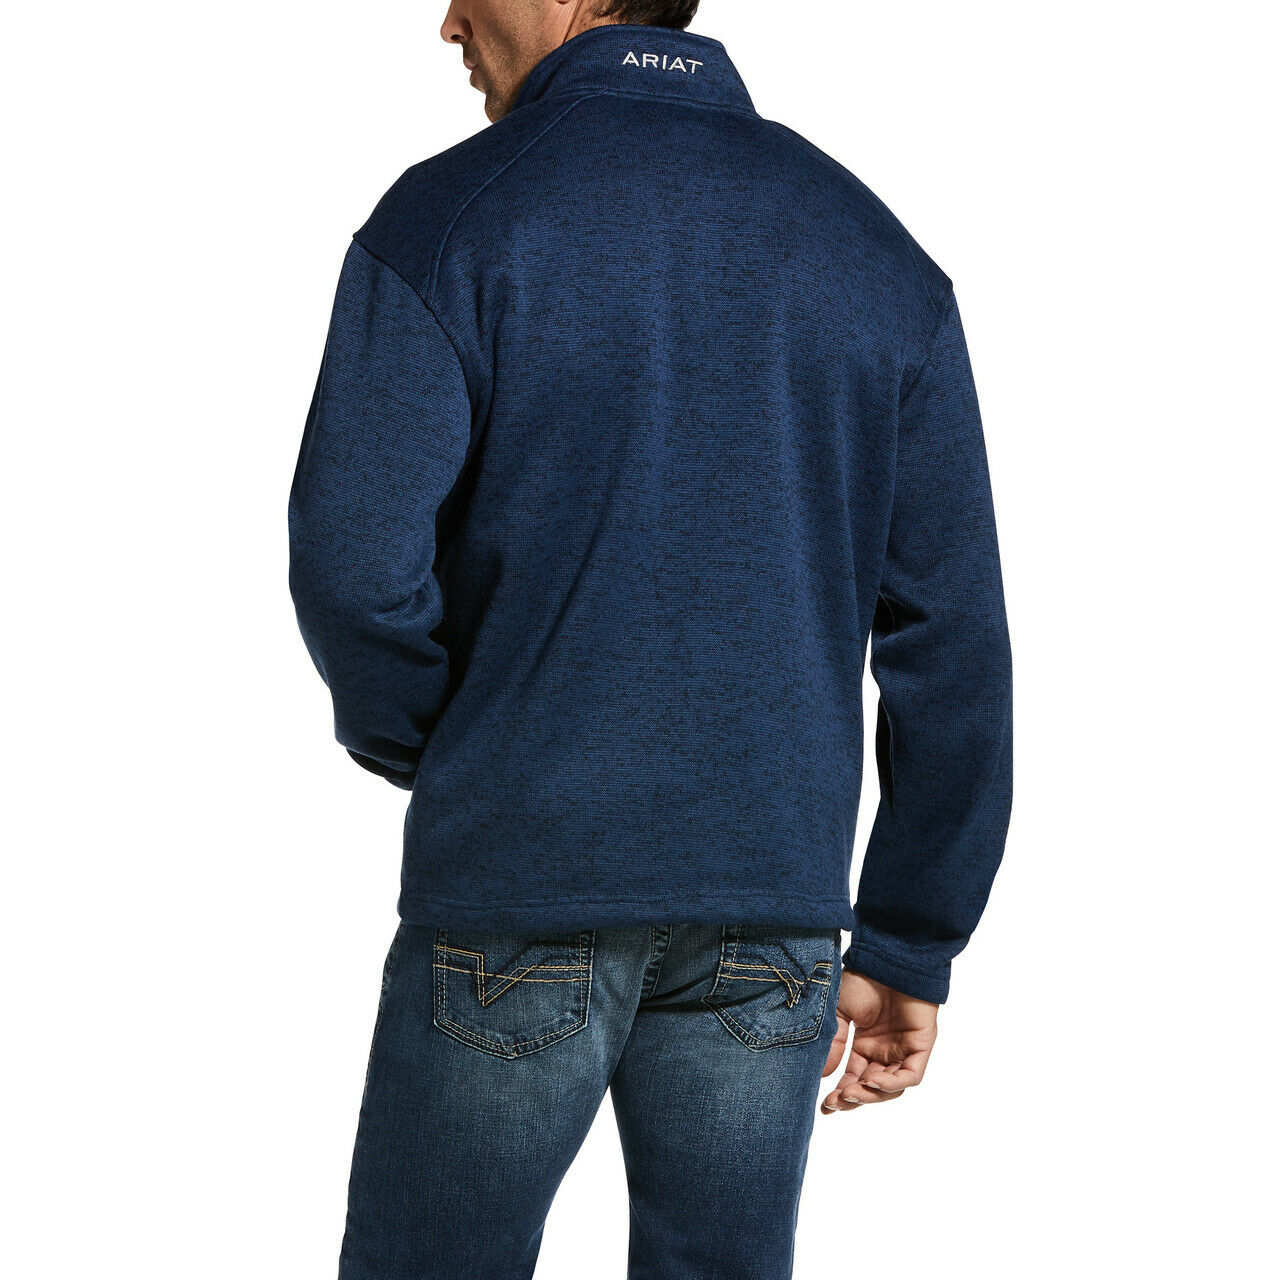 Ariat® Men's Indigo Heather Caldwell 1/4 Zip Sweater Jacket 10033005